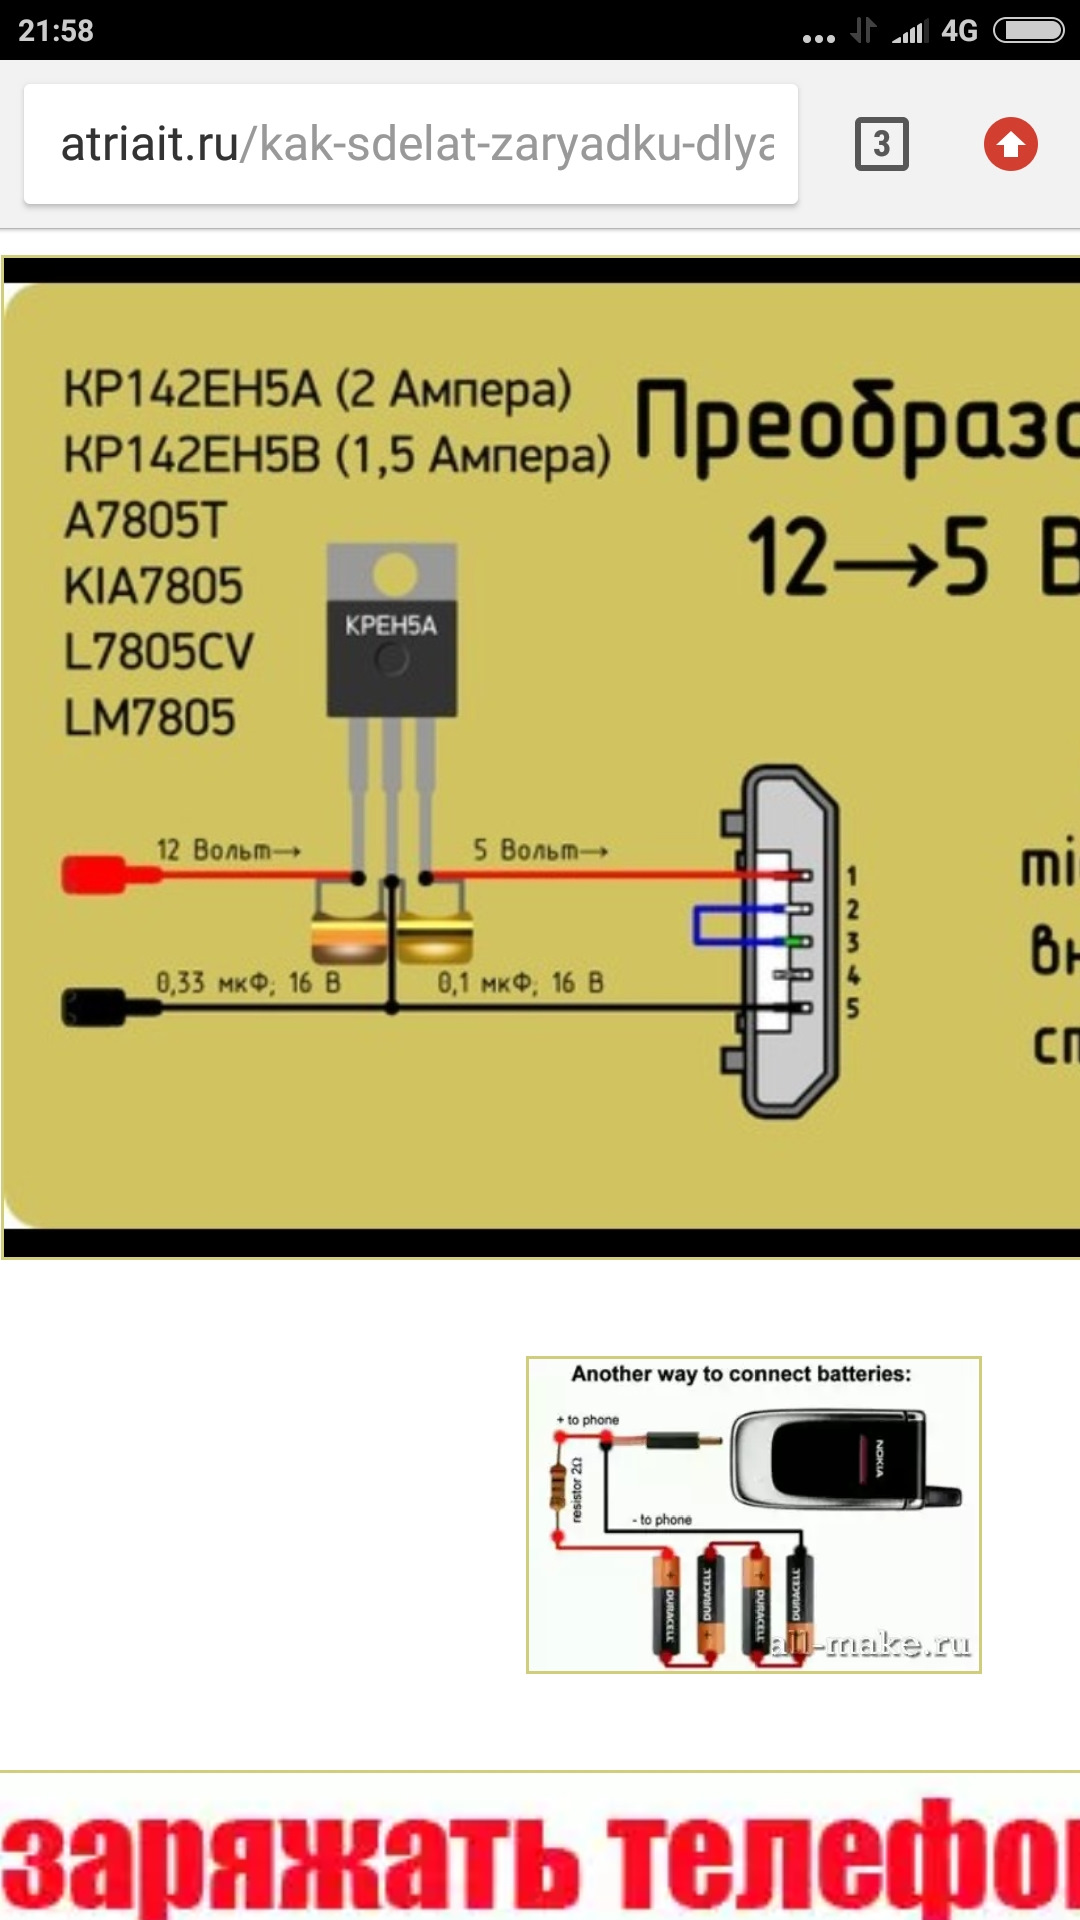 USB мышь своими руками из акселерометра и программатора USBAsp / Комментарии / Хабр